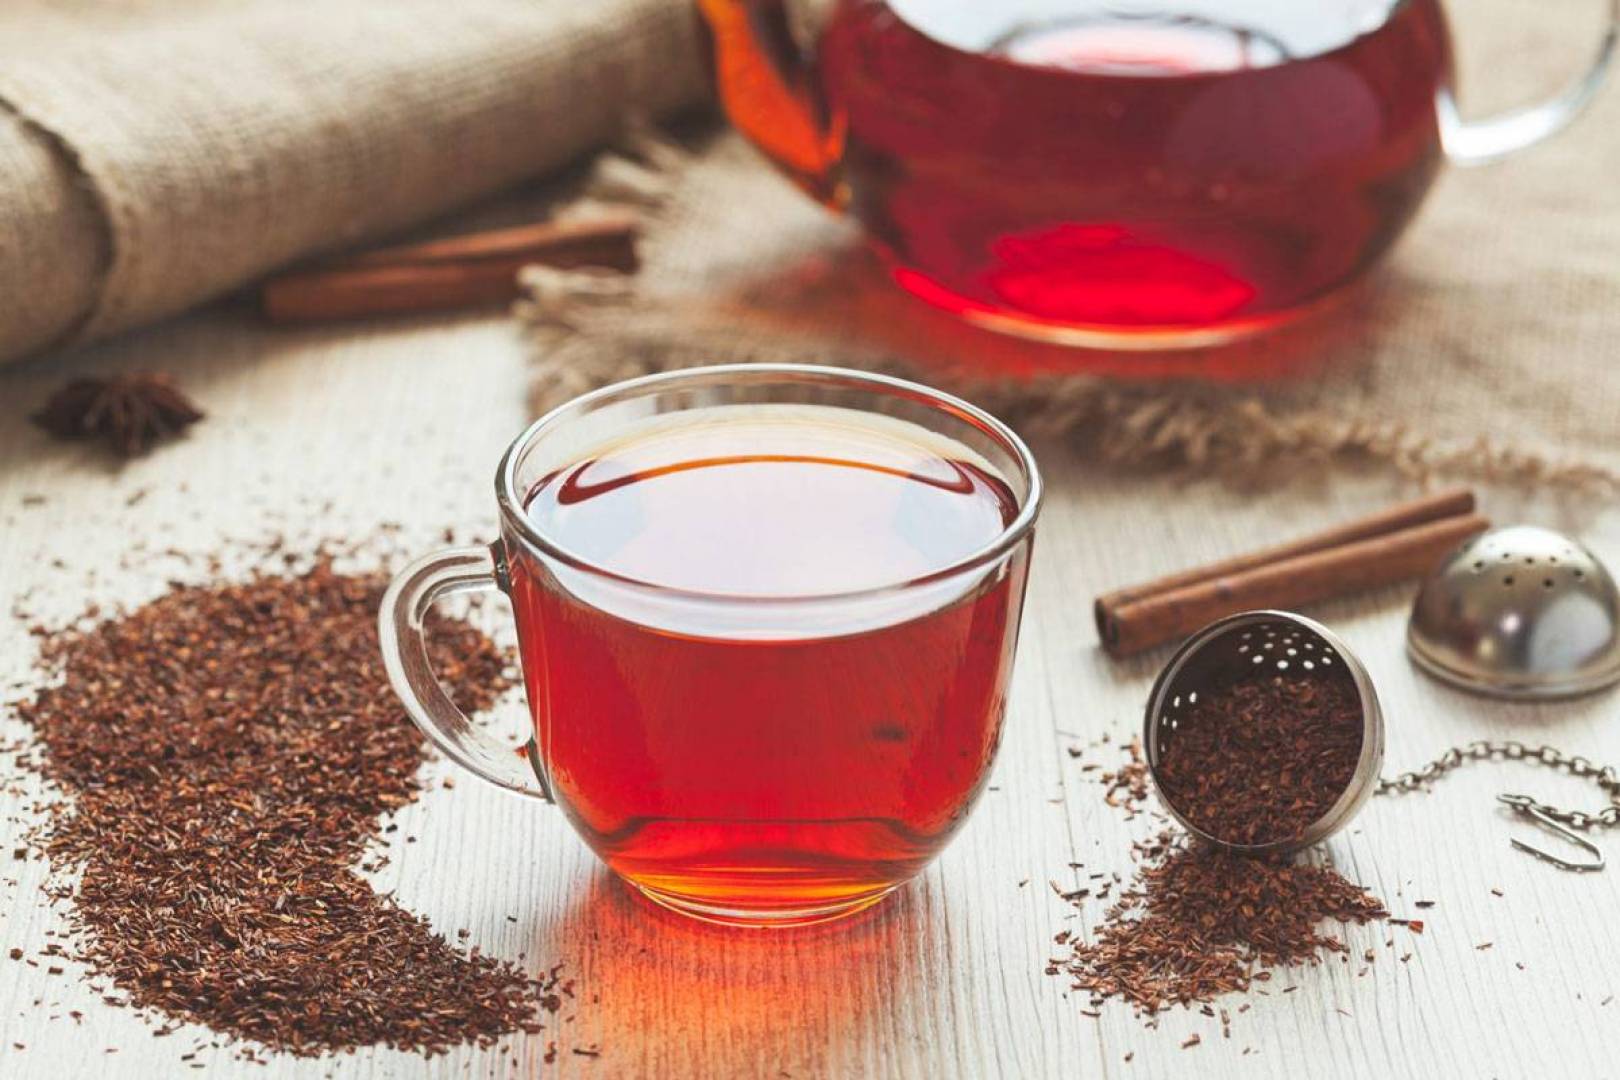 Ibn Sirin ၏ အိပ်မက်ထဲတွင် လက်ဖက်ရည်